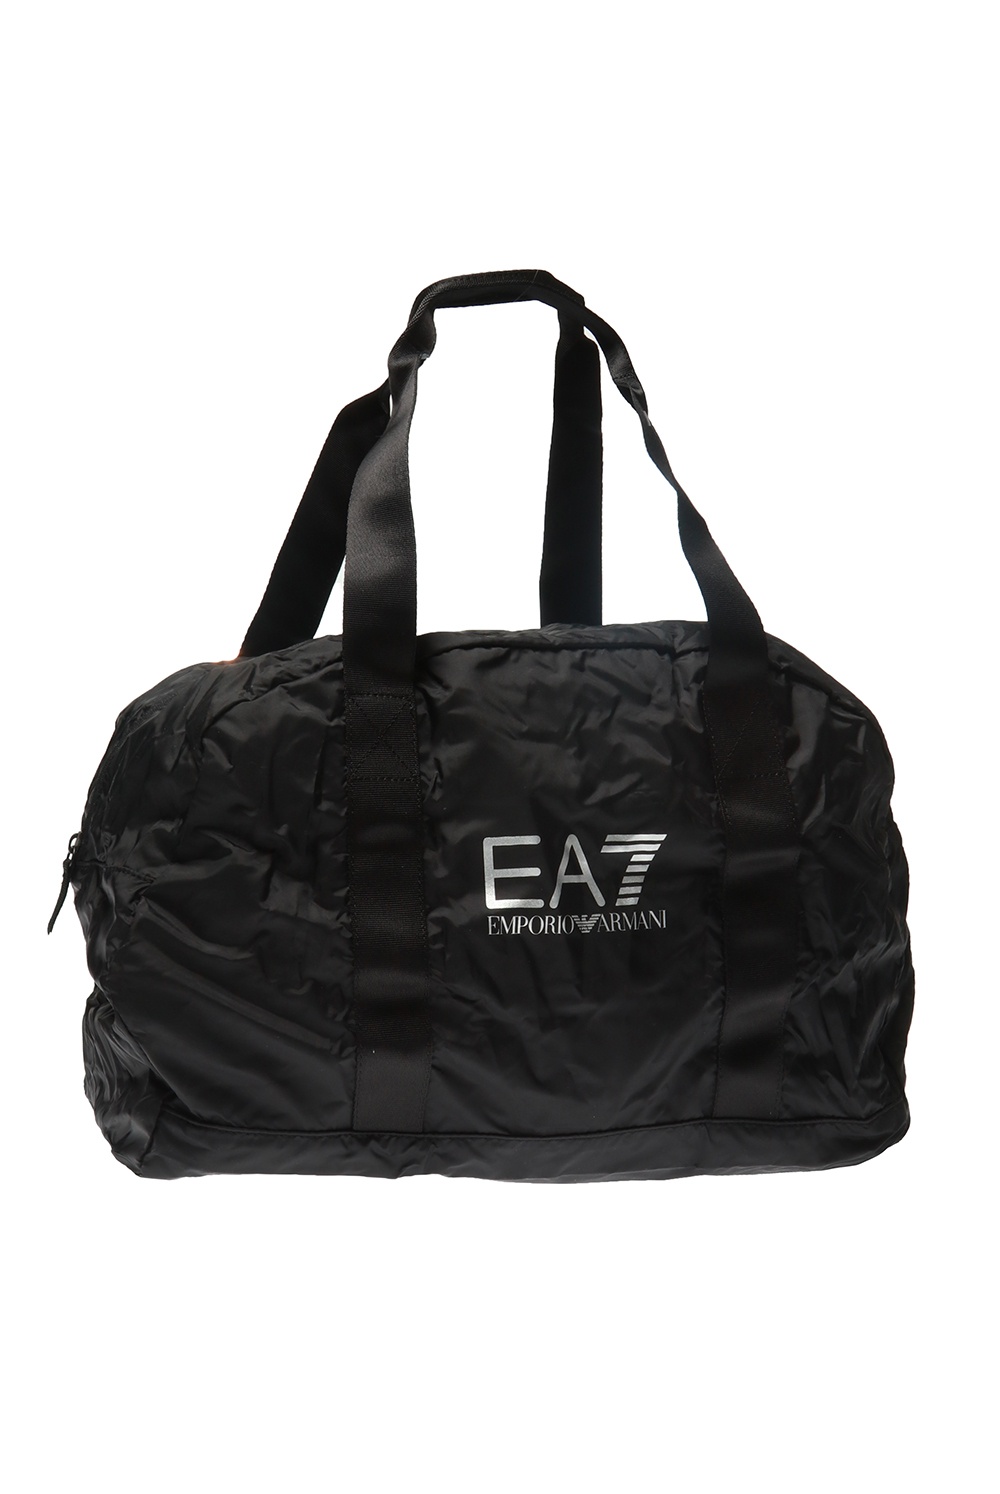 Black Holdall bag with a logo EA7 Emporio Armani - Vitkac Norway